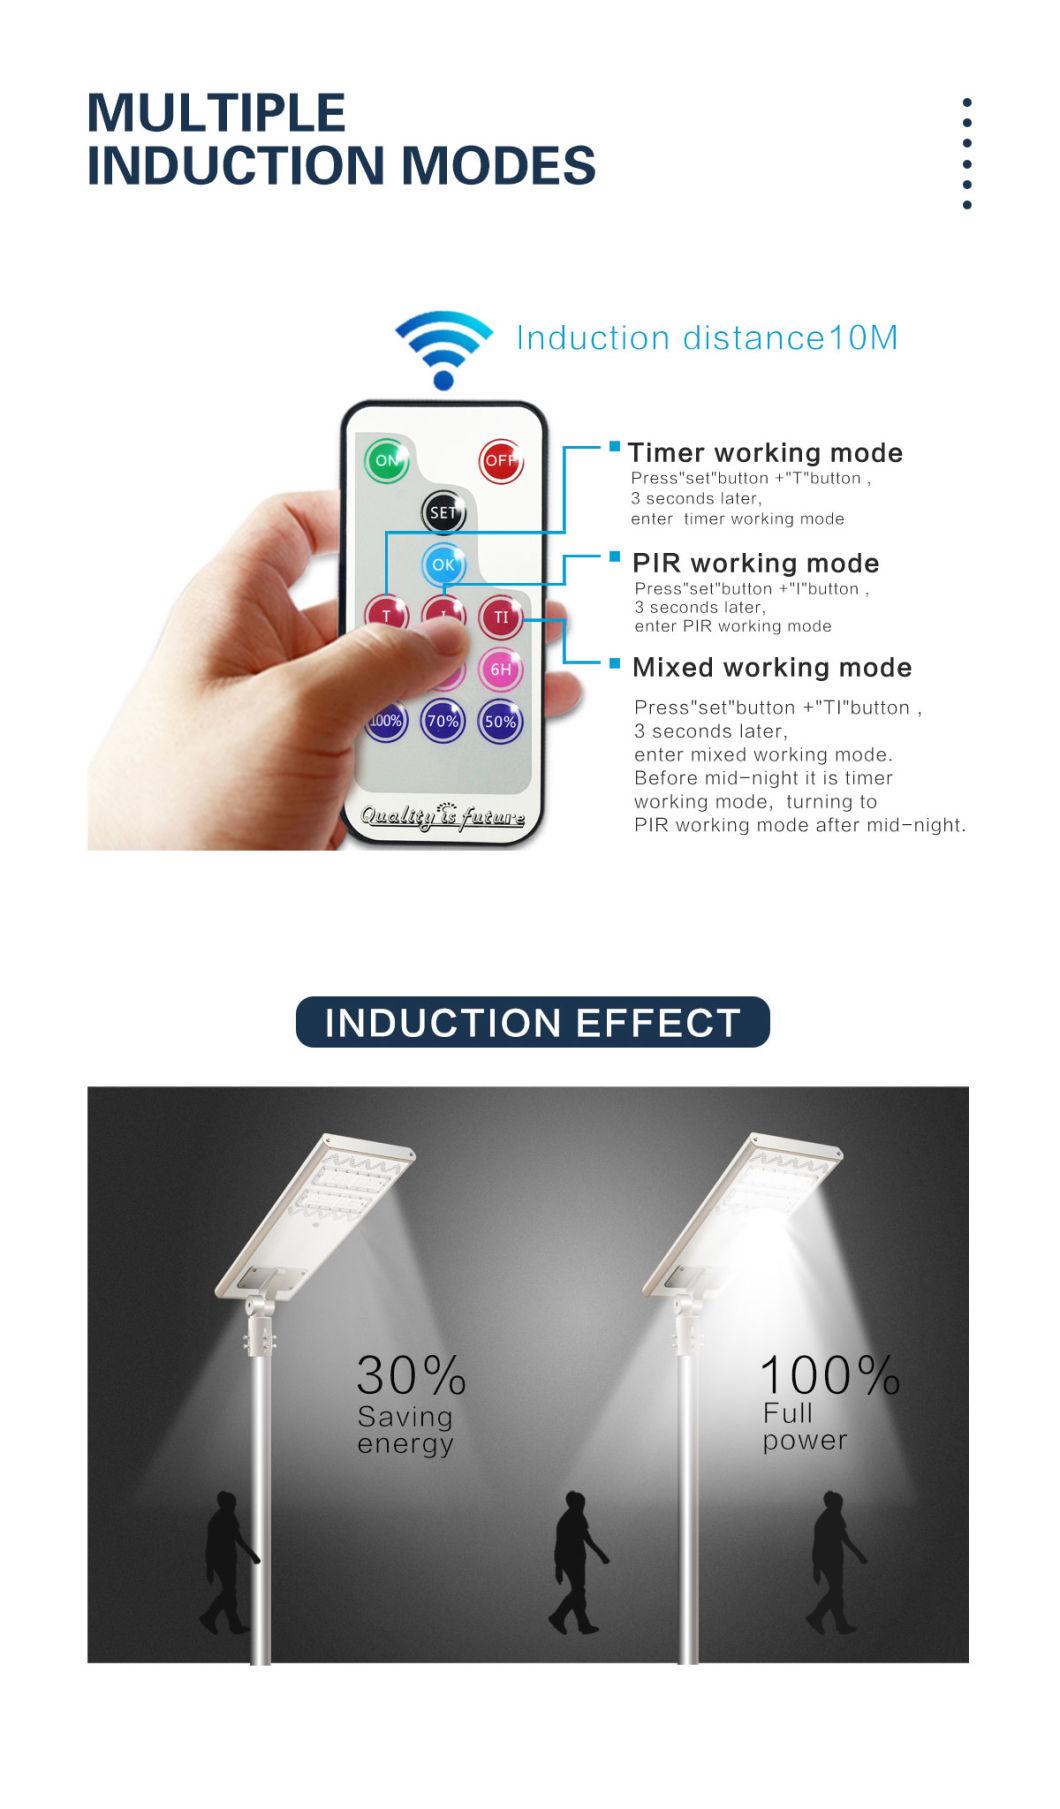 Second Sun Factory Direct IP65 Bridgelux 50W Solar LED Street Lighting System Price